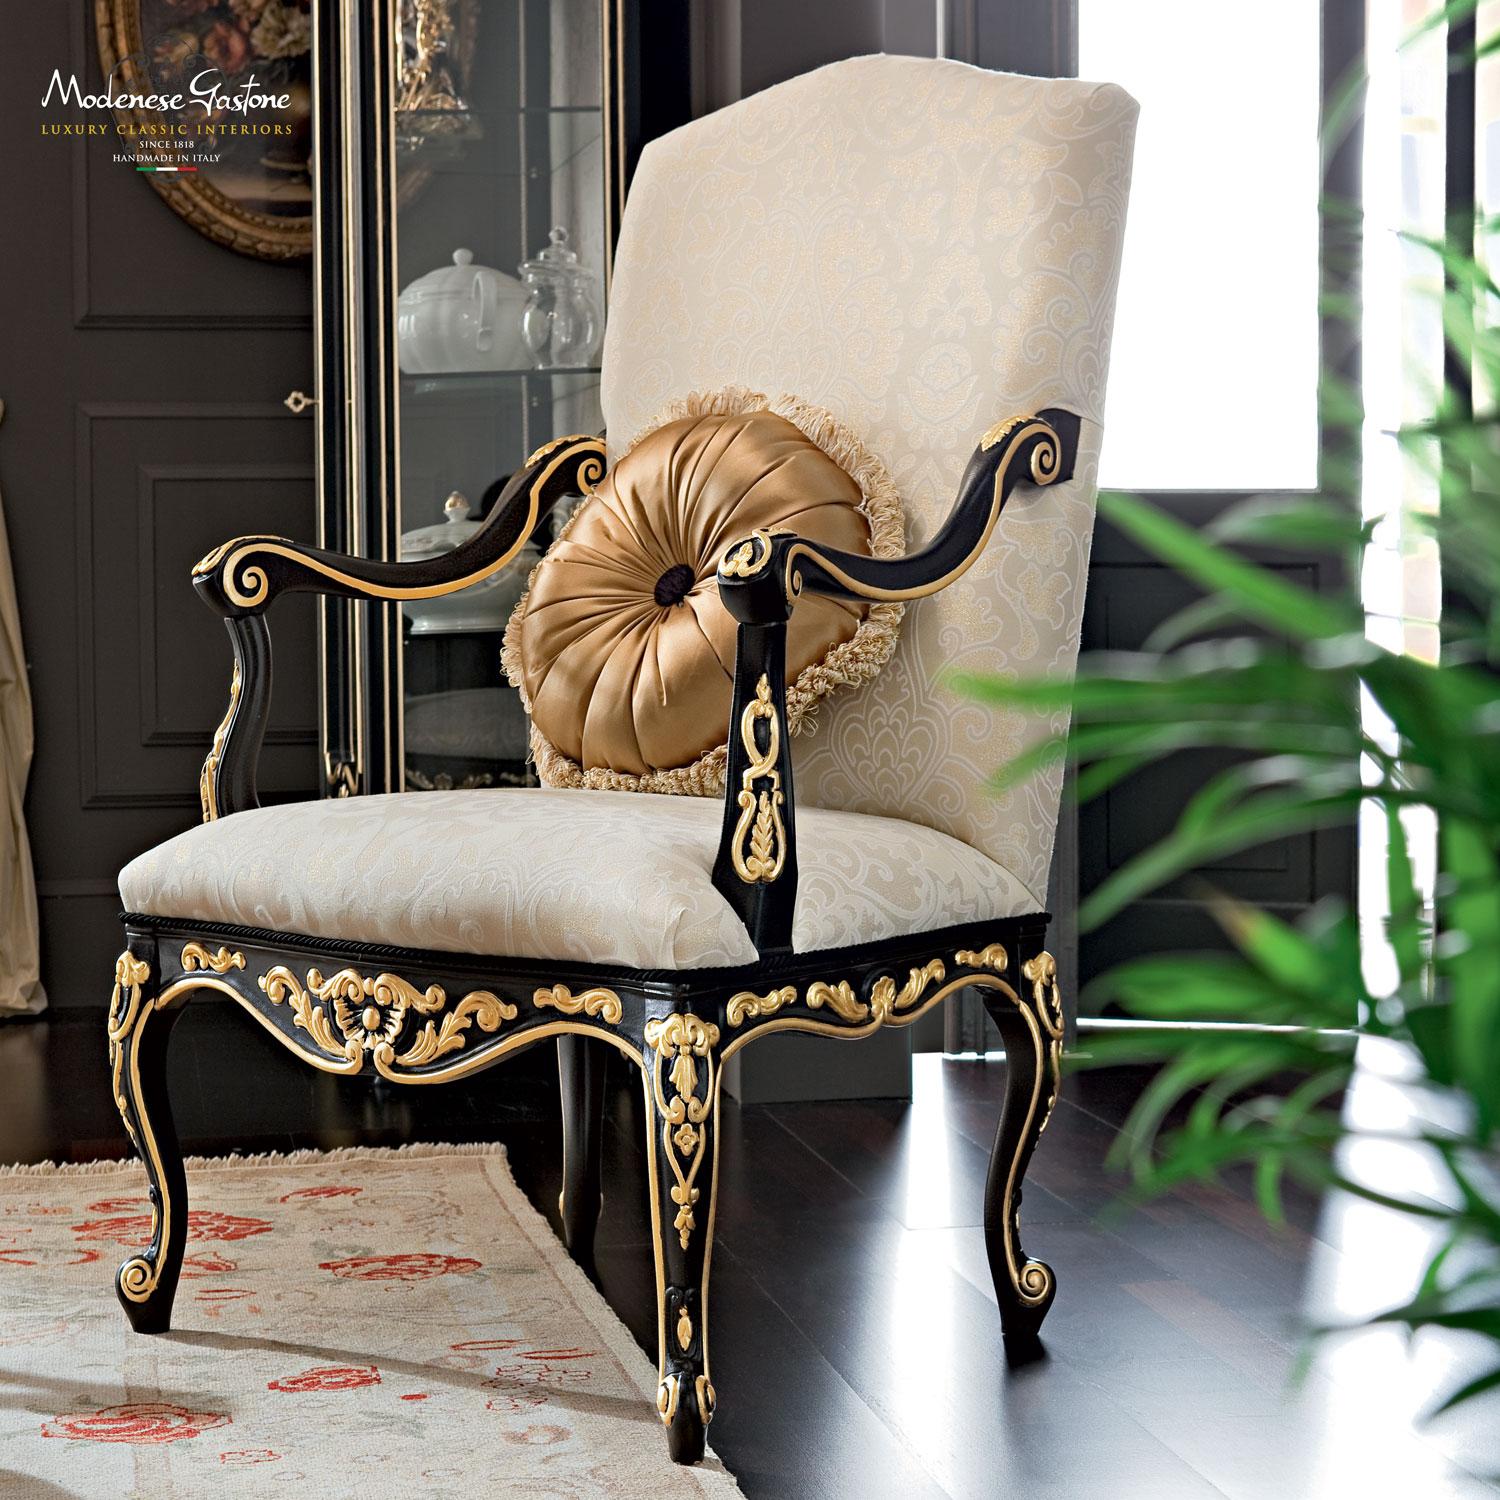 Rococo Fauteuil rococo en finition noire et or par Modenese Luxury Interiors en vente